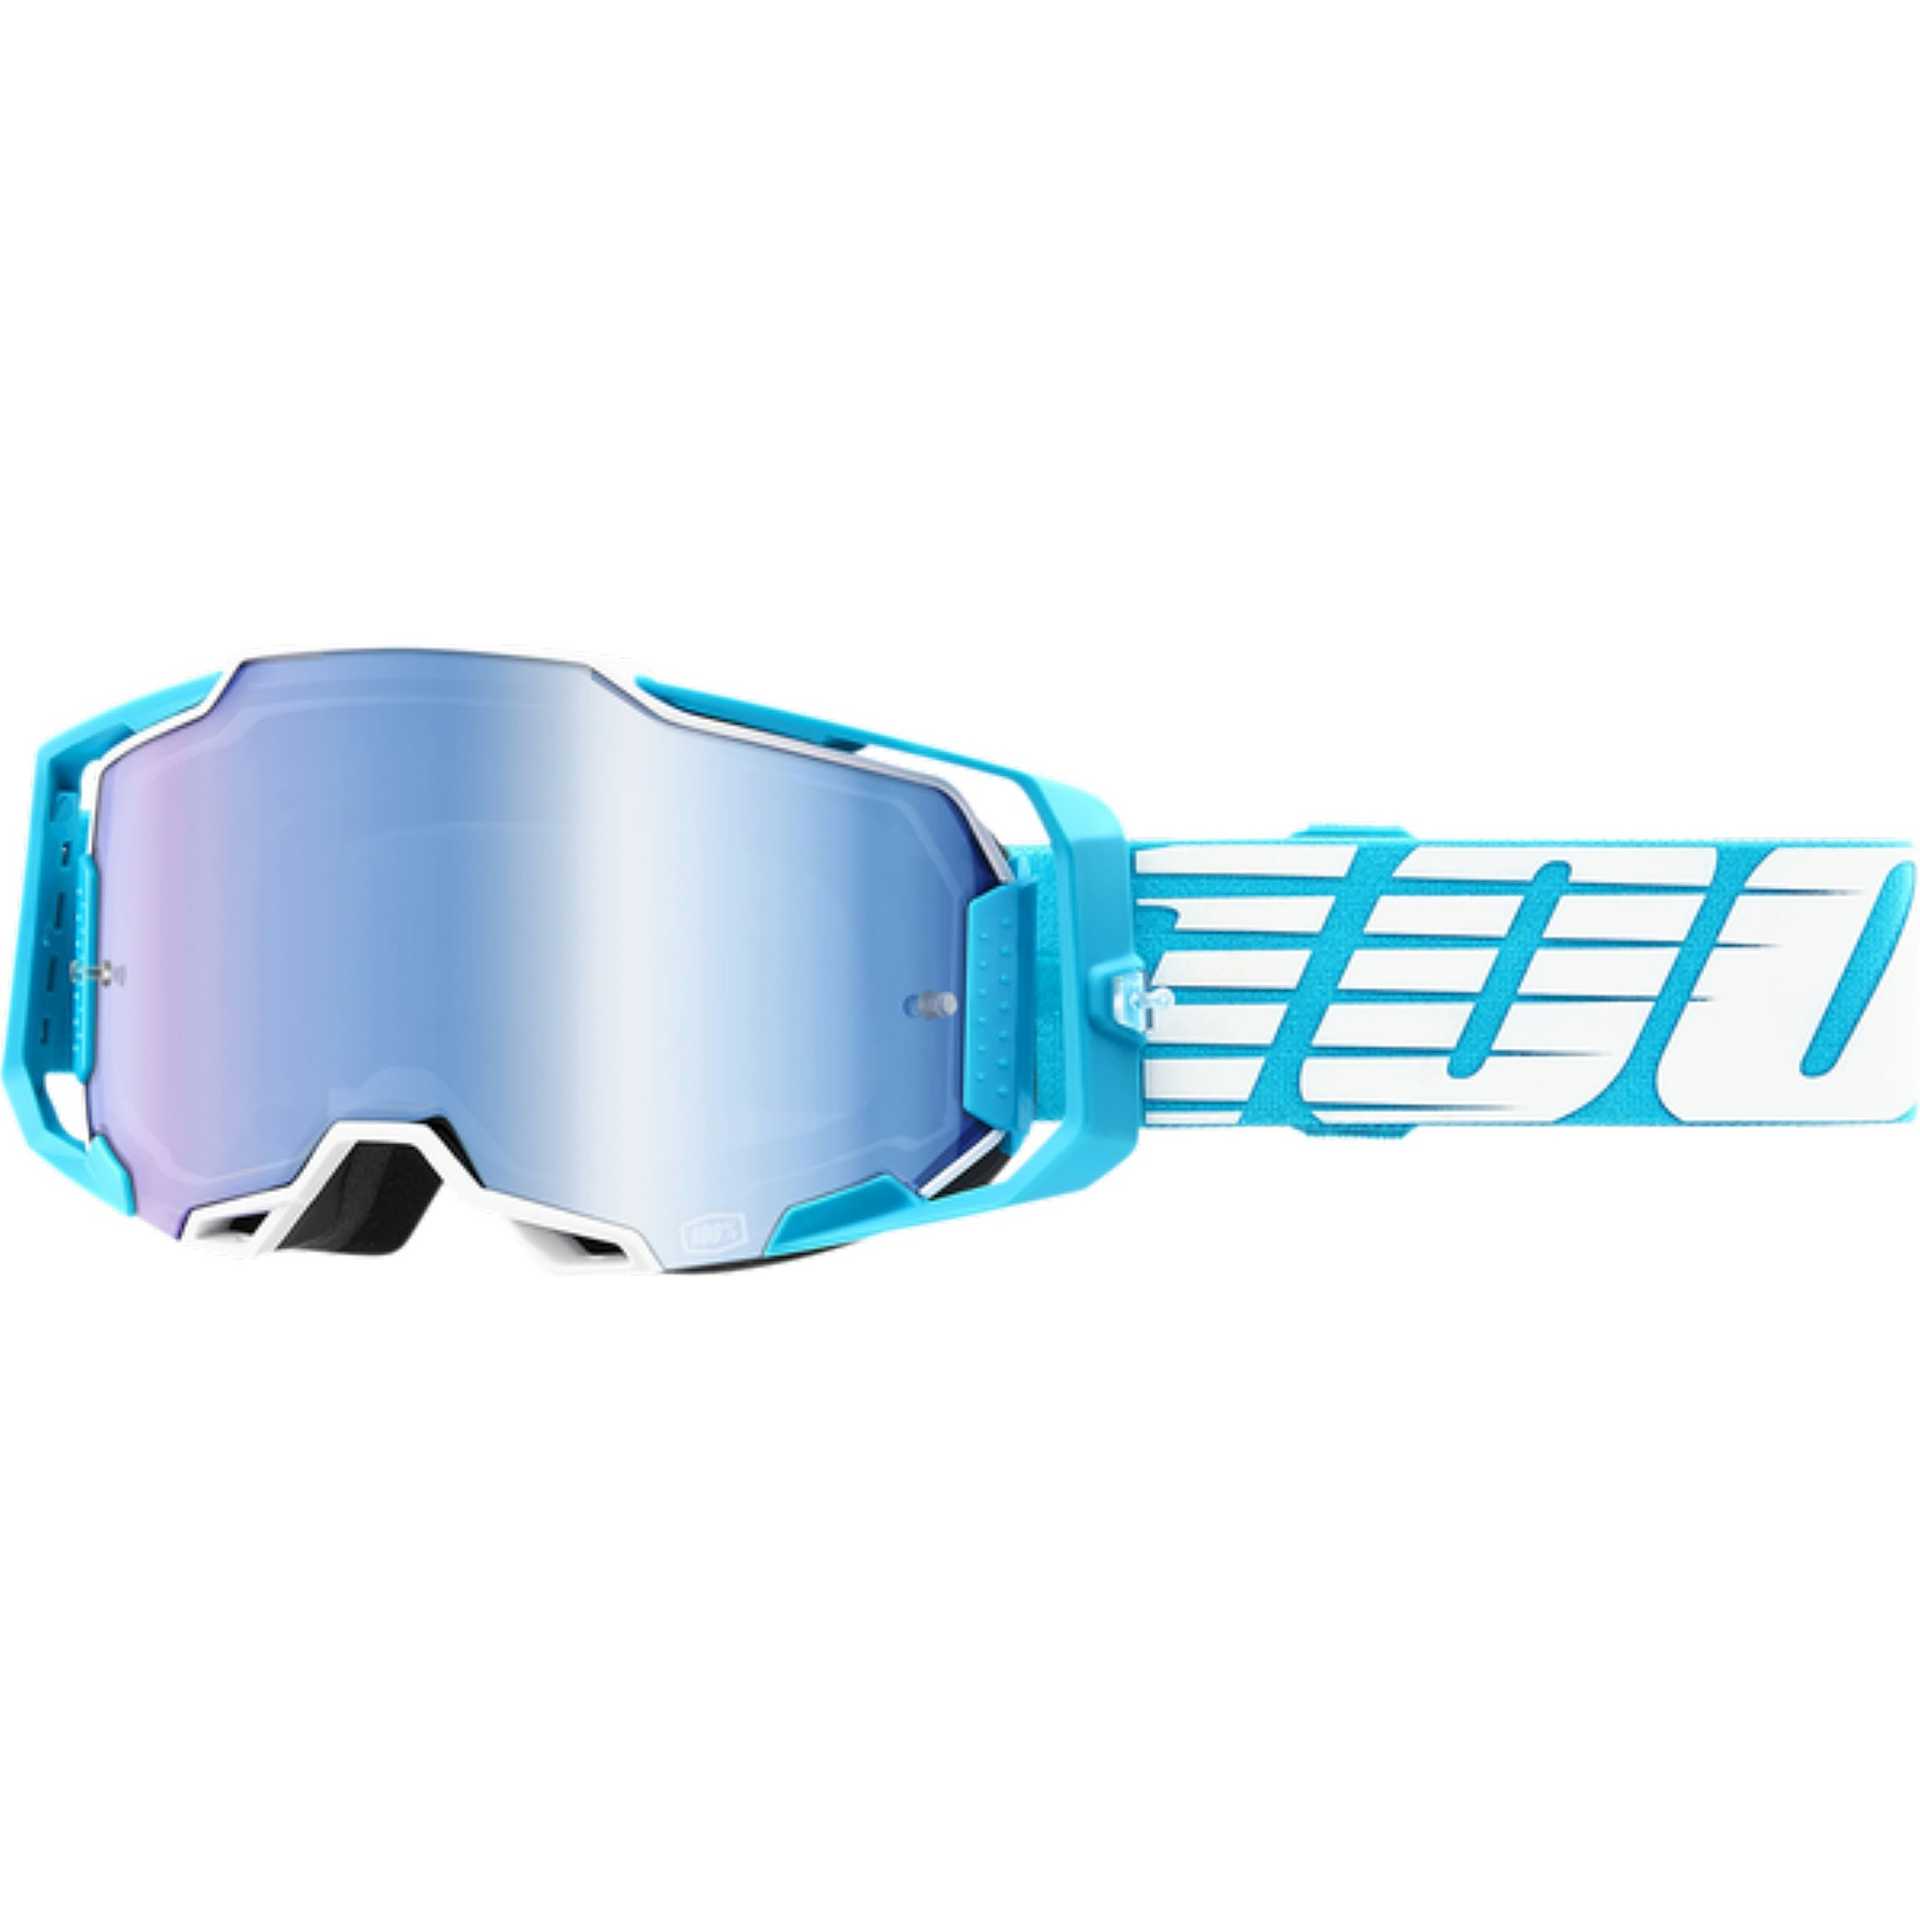 Maschera motocross armega - lente trasparente